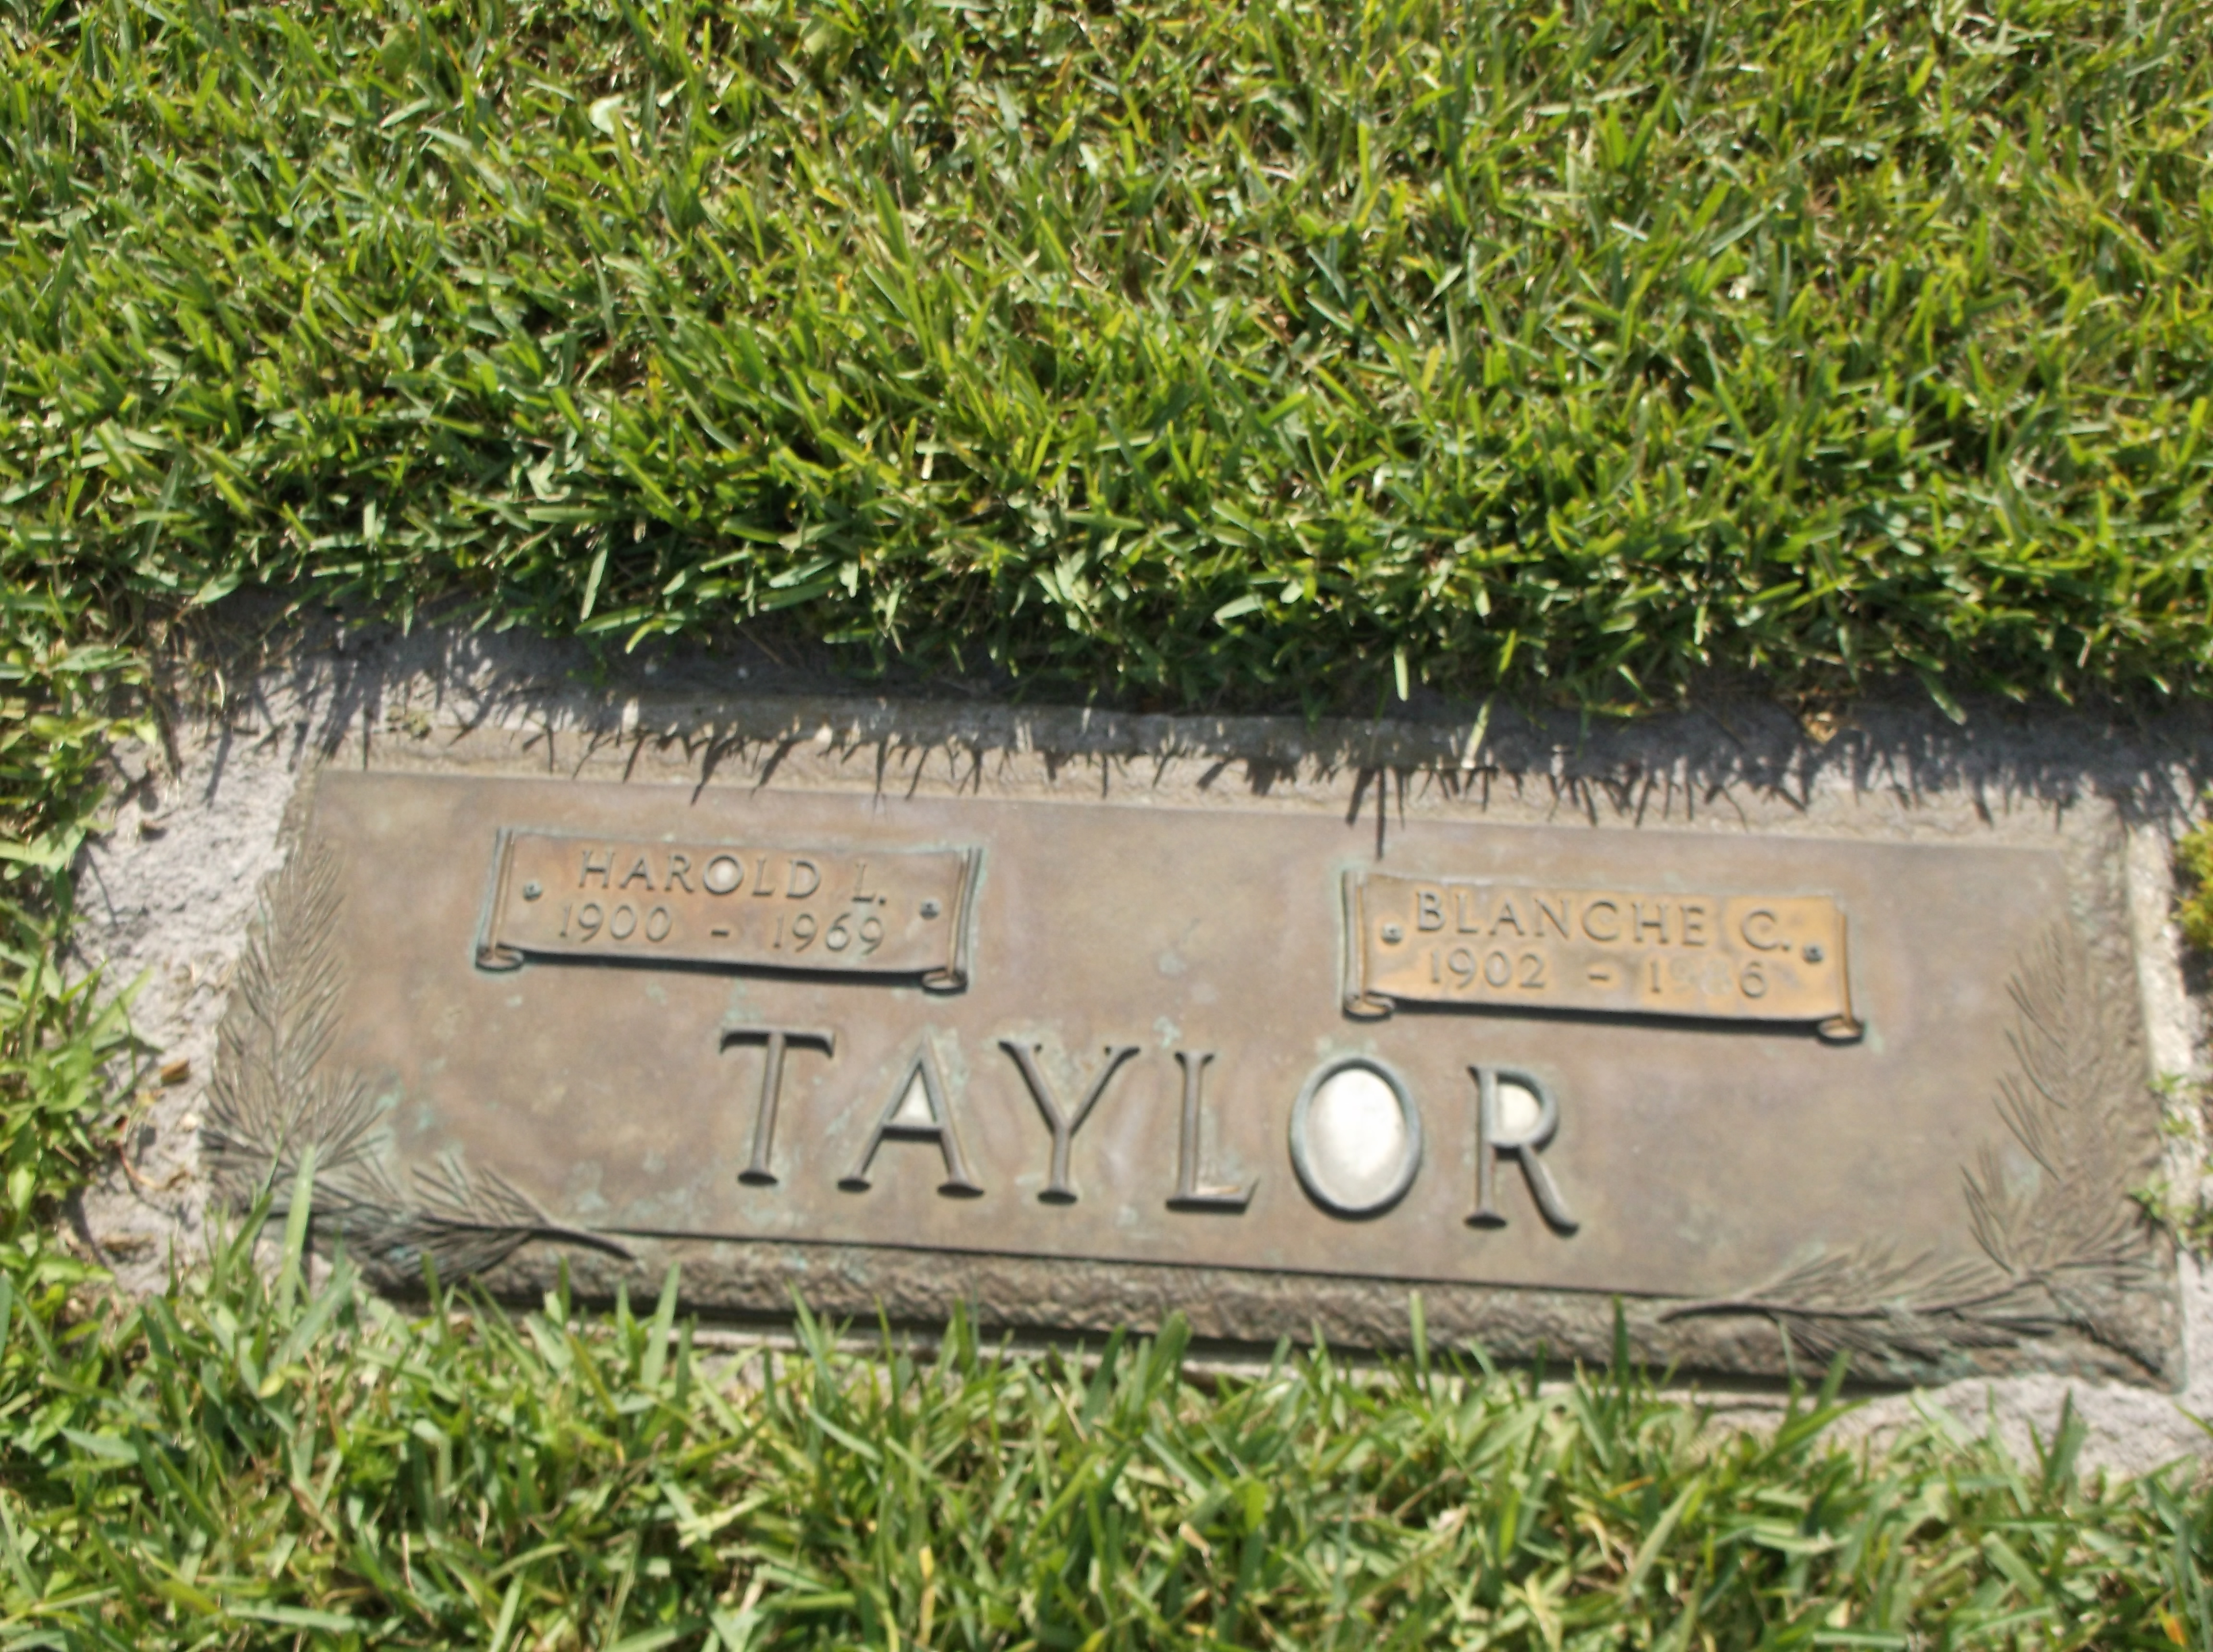 Harold L Taylor